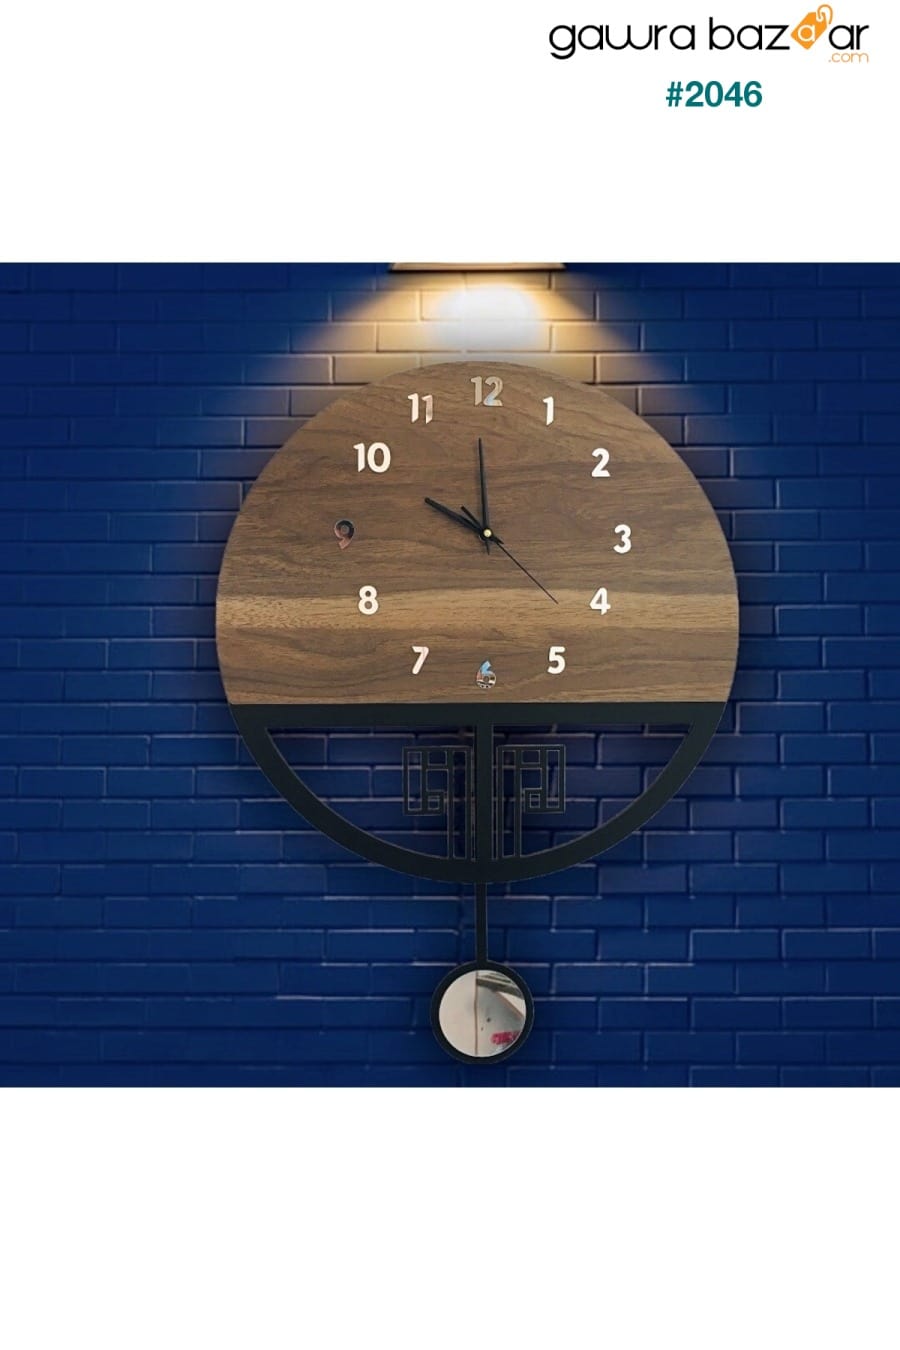 ساعة حائط خشبية بندول صامت ، ساعة بندول ، ساعة حائط ، ساعة حائط خشبية ، ساعة حائط بندول hayalevimahsap 6